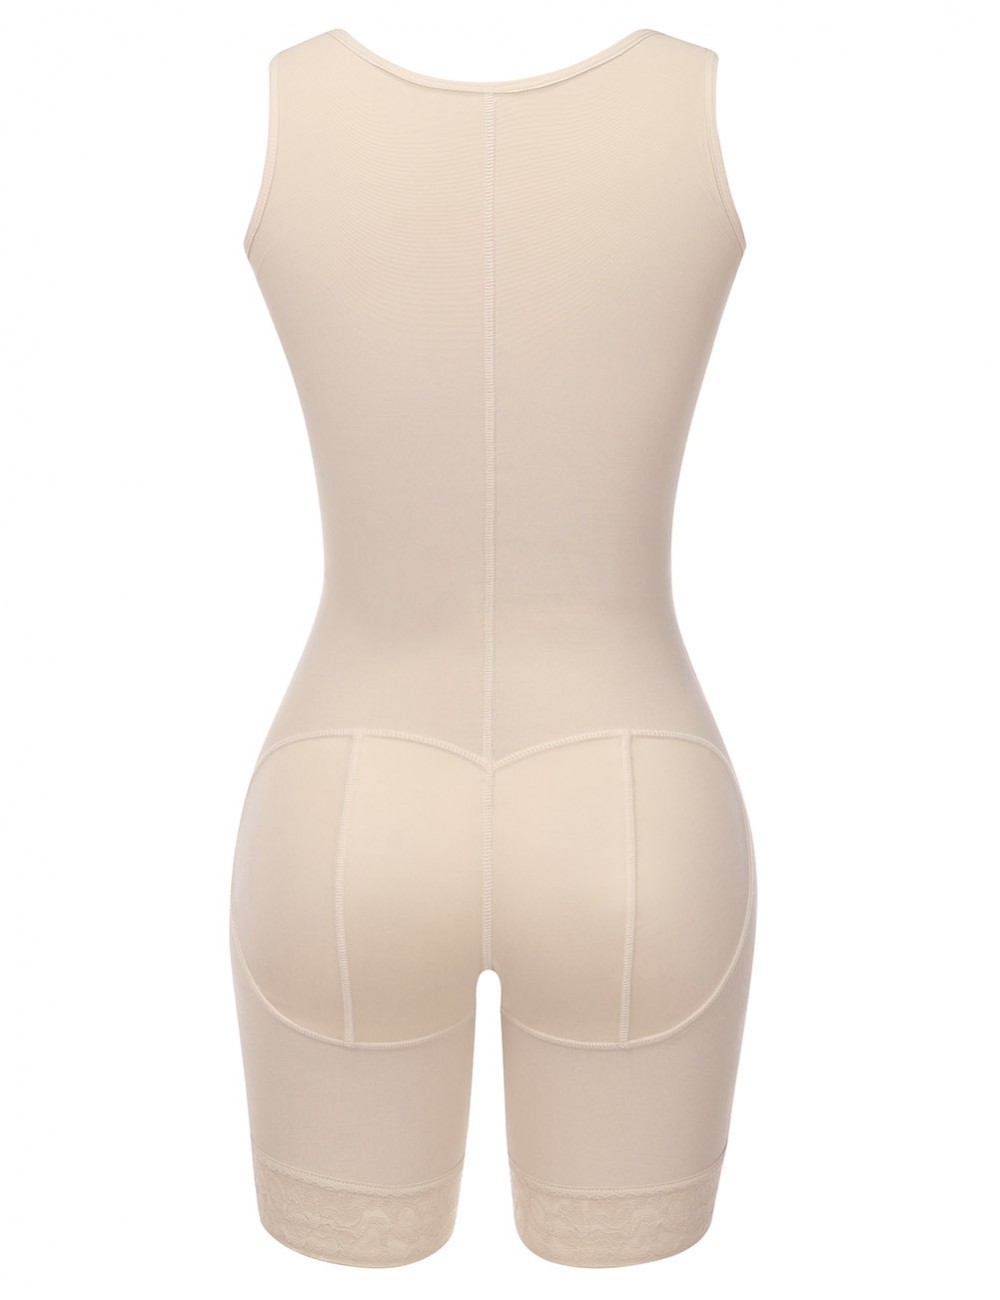 Hook Open Crotch Underbust Body Shaper Bodysuit Big Size Shaping Comfort